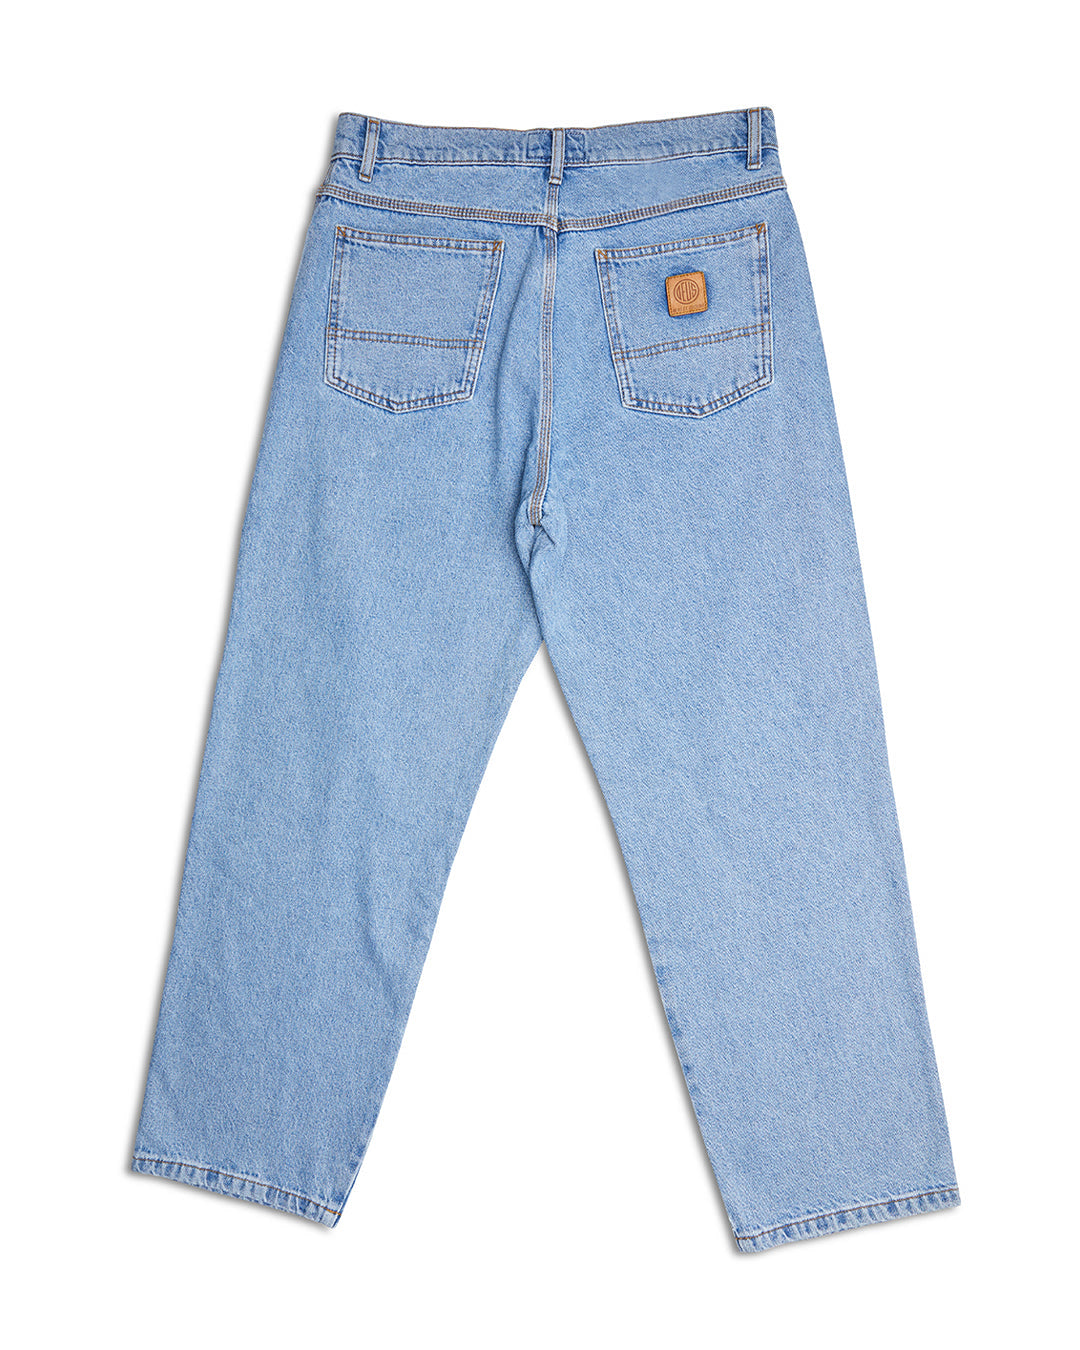 Japanese 12oz Washed Light Grey Stretch Jeans - Custom Fit Pants